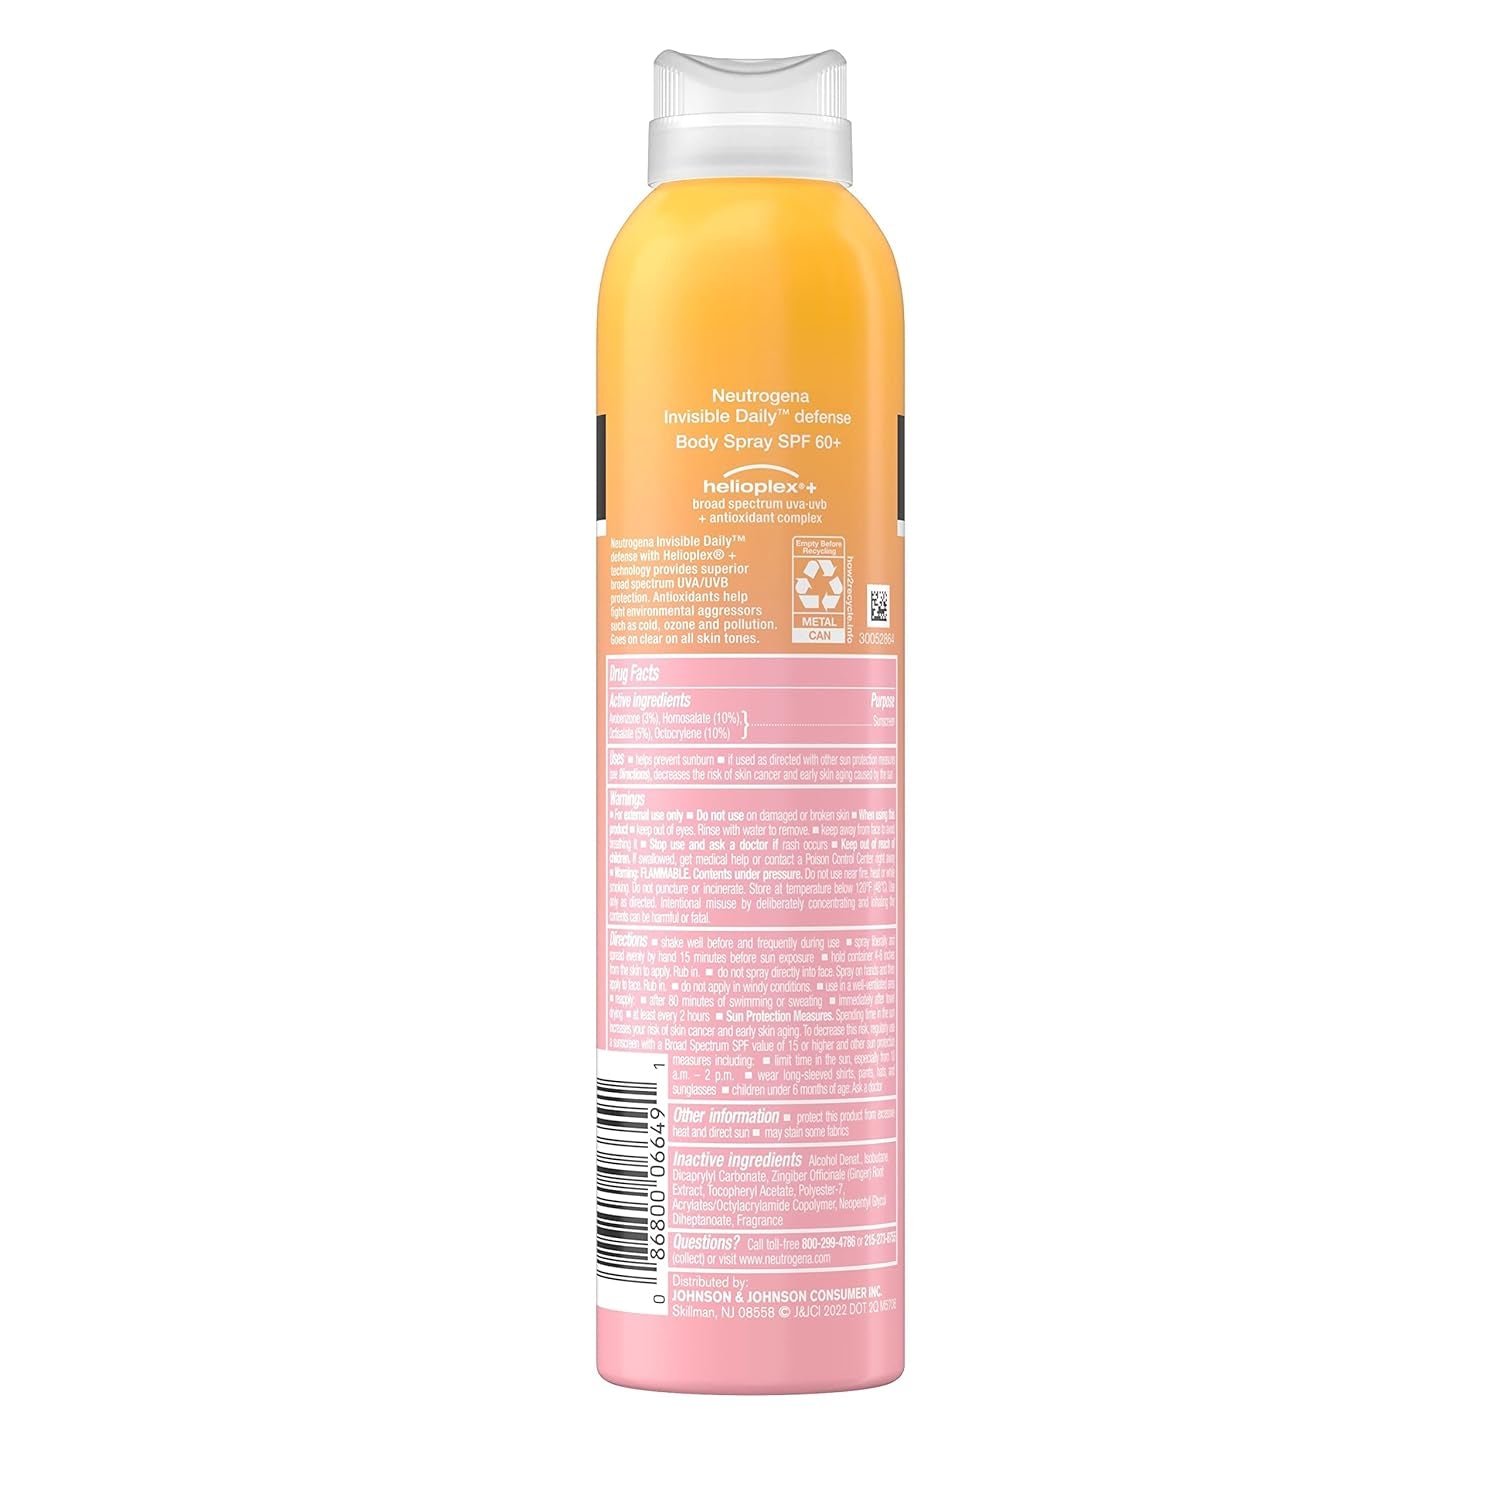 Neutrogena Daily Defense Sunscreen Spray SPF 60+ - Water-Resistant, Antioxidant Complex